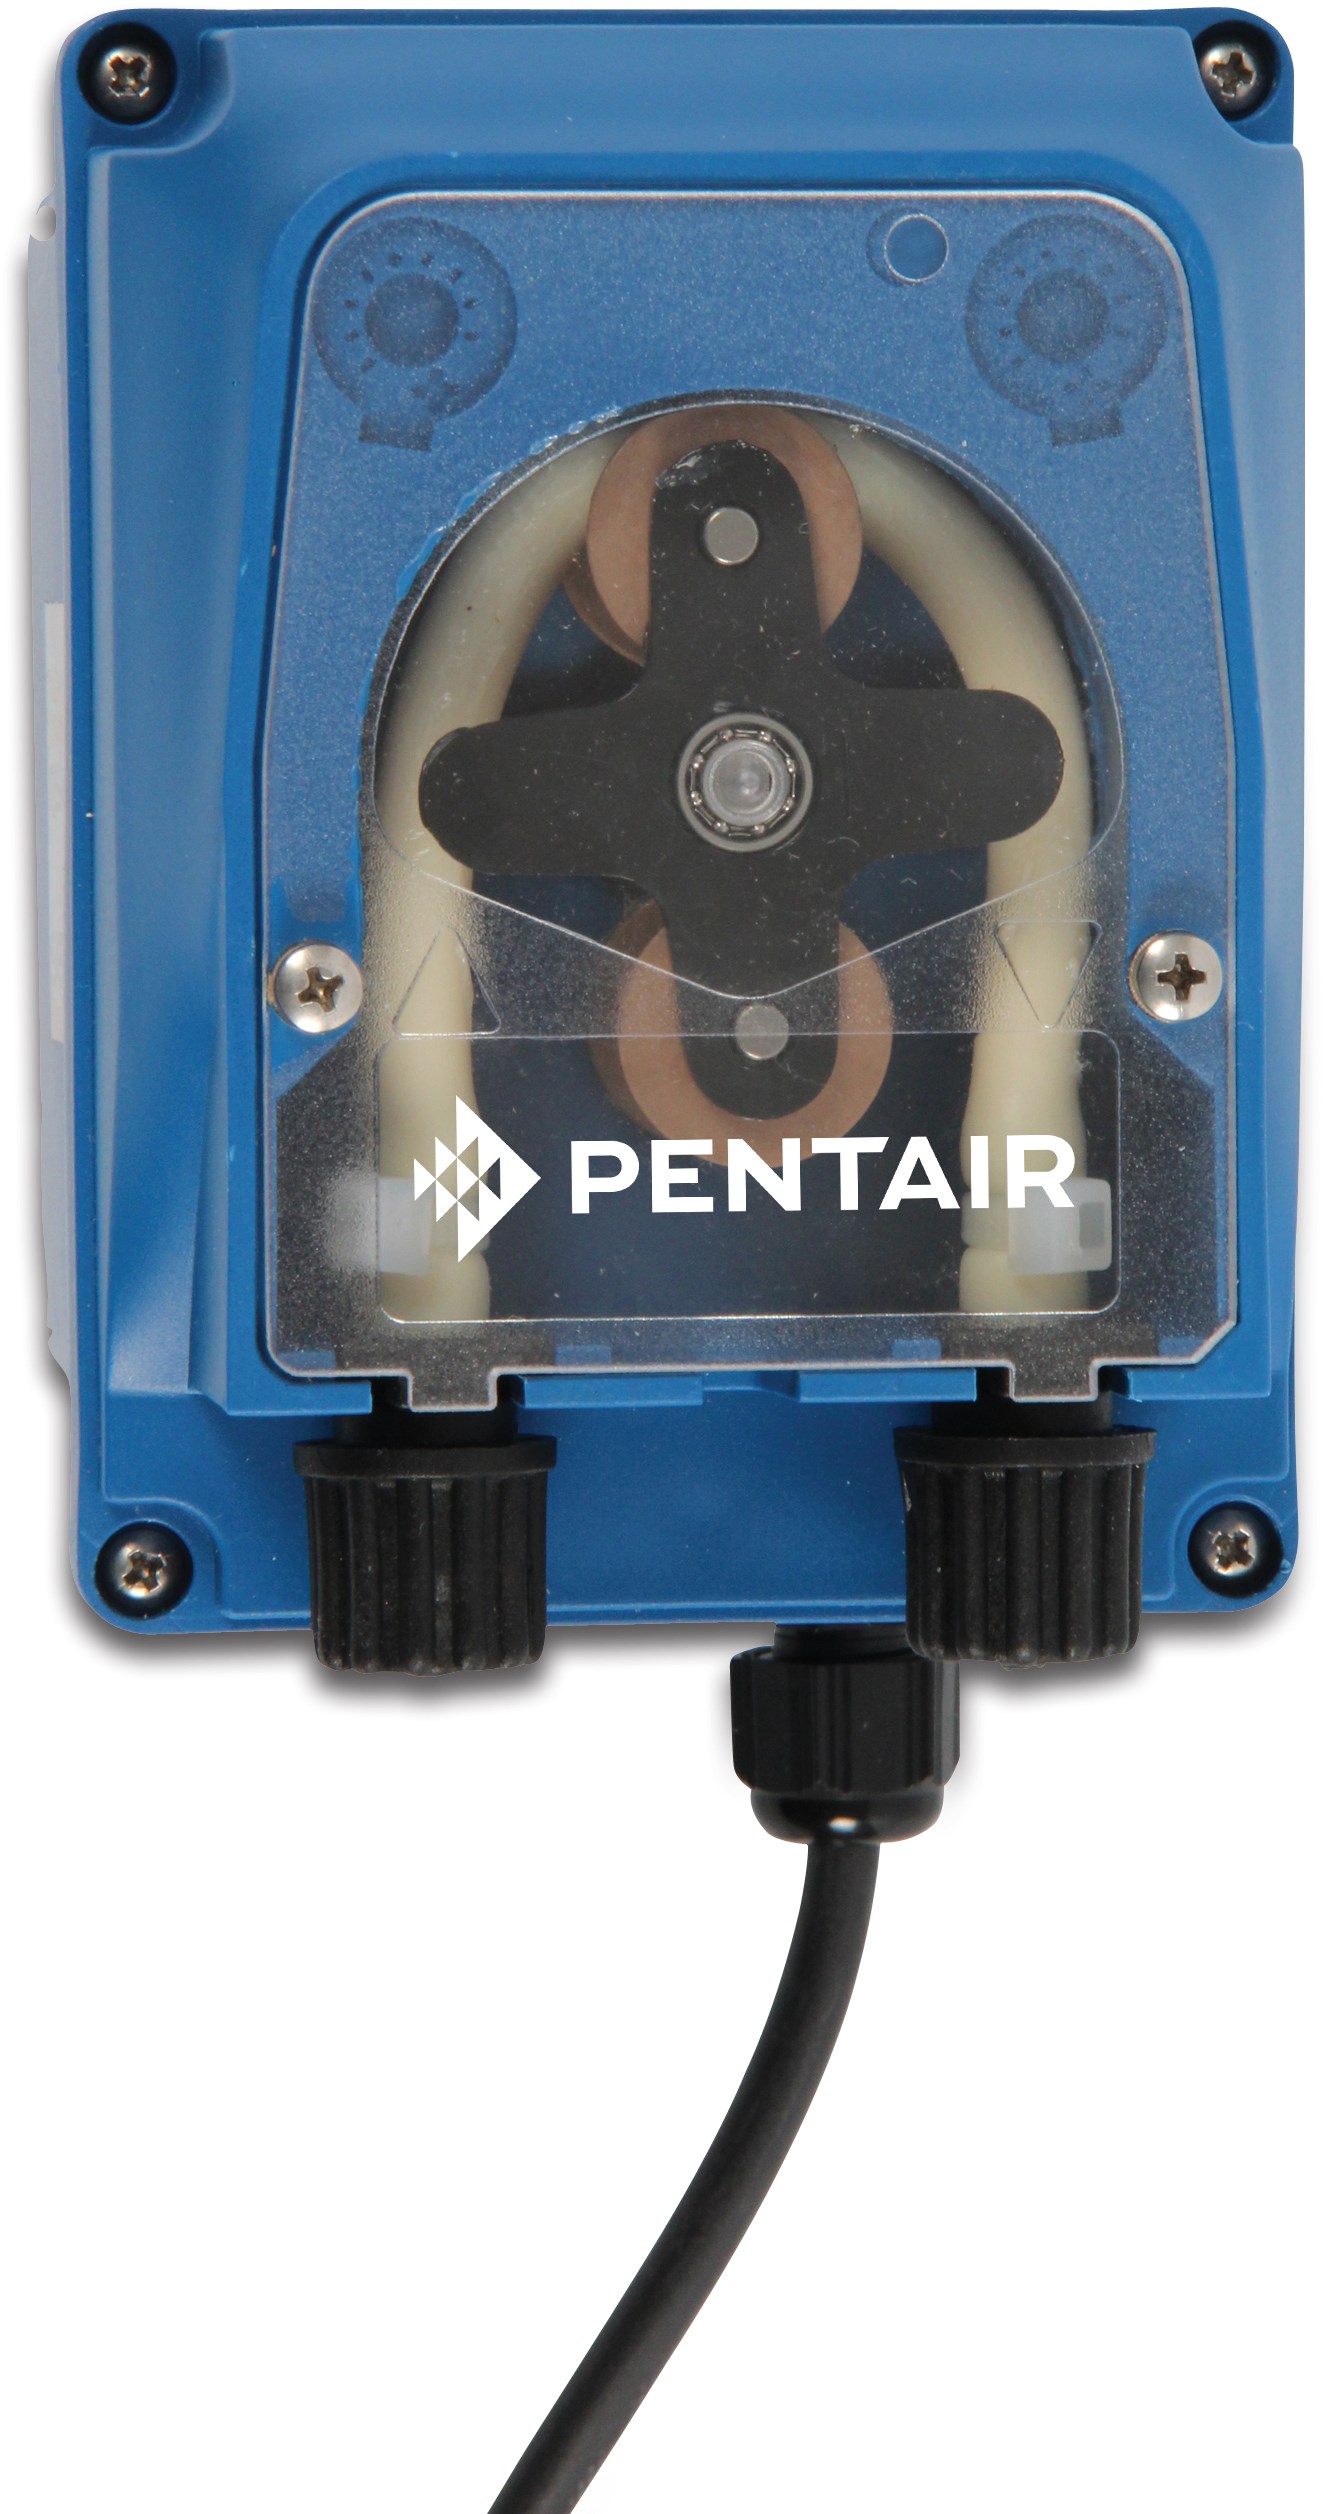 Pentair Peristaltic dosing pump kit